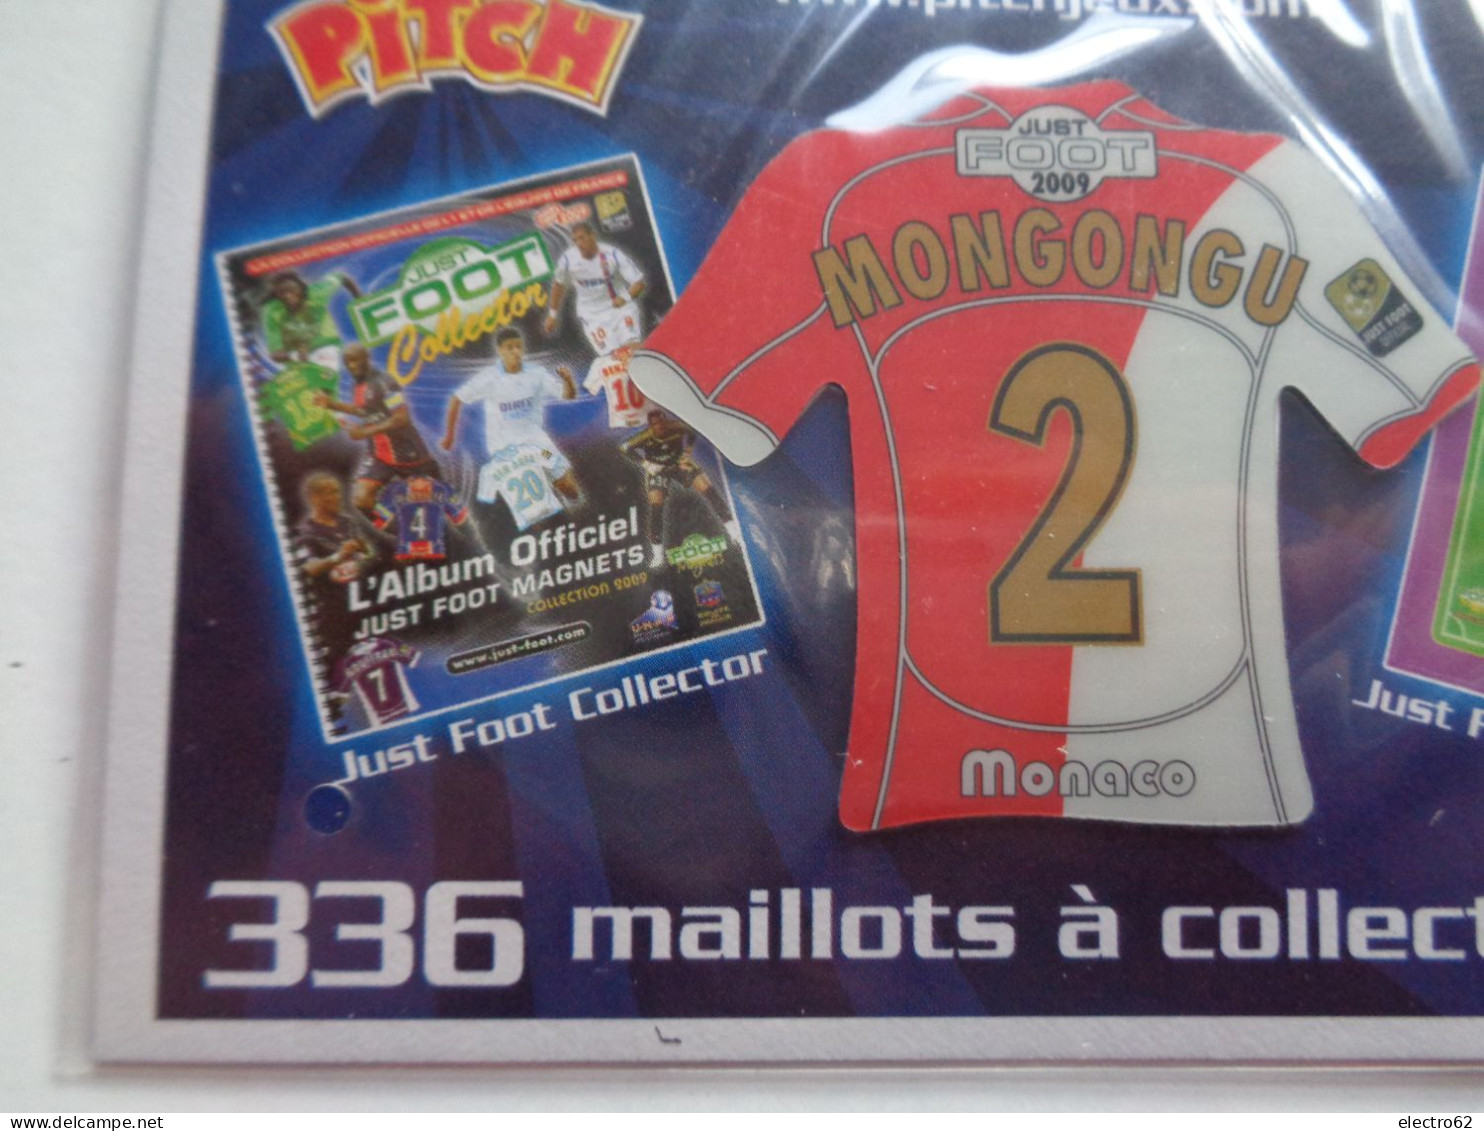 Magnet Football Pasquier Pitch Monaco Mongongu Foot Calcio Soccer Fußball Voetbal Fotball Fútbol Futebol - Sport